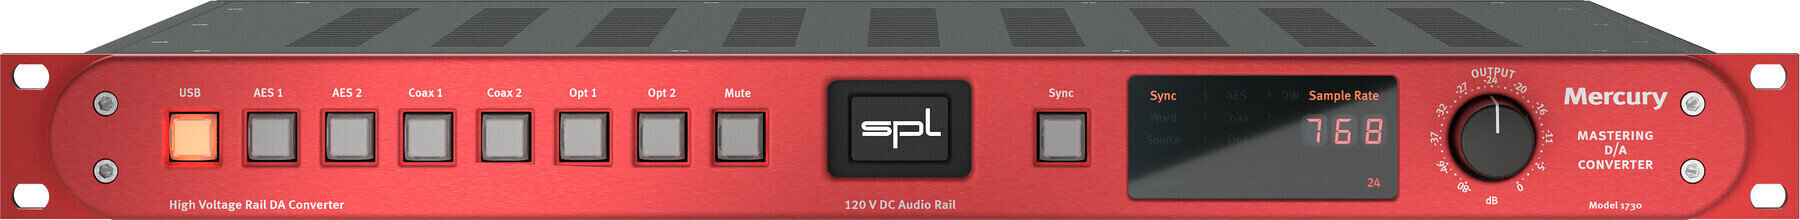 Digitale audiosignaalconverter SPL Mercury